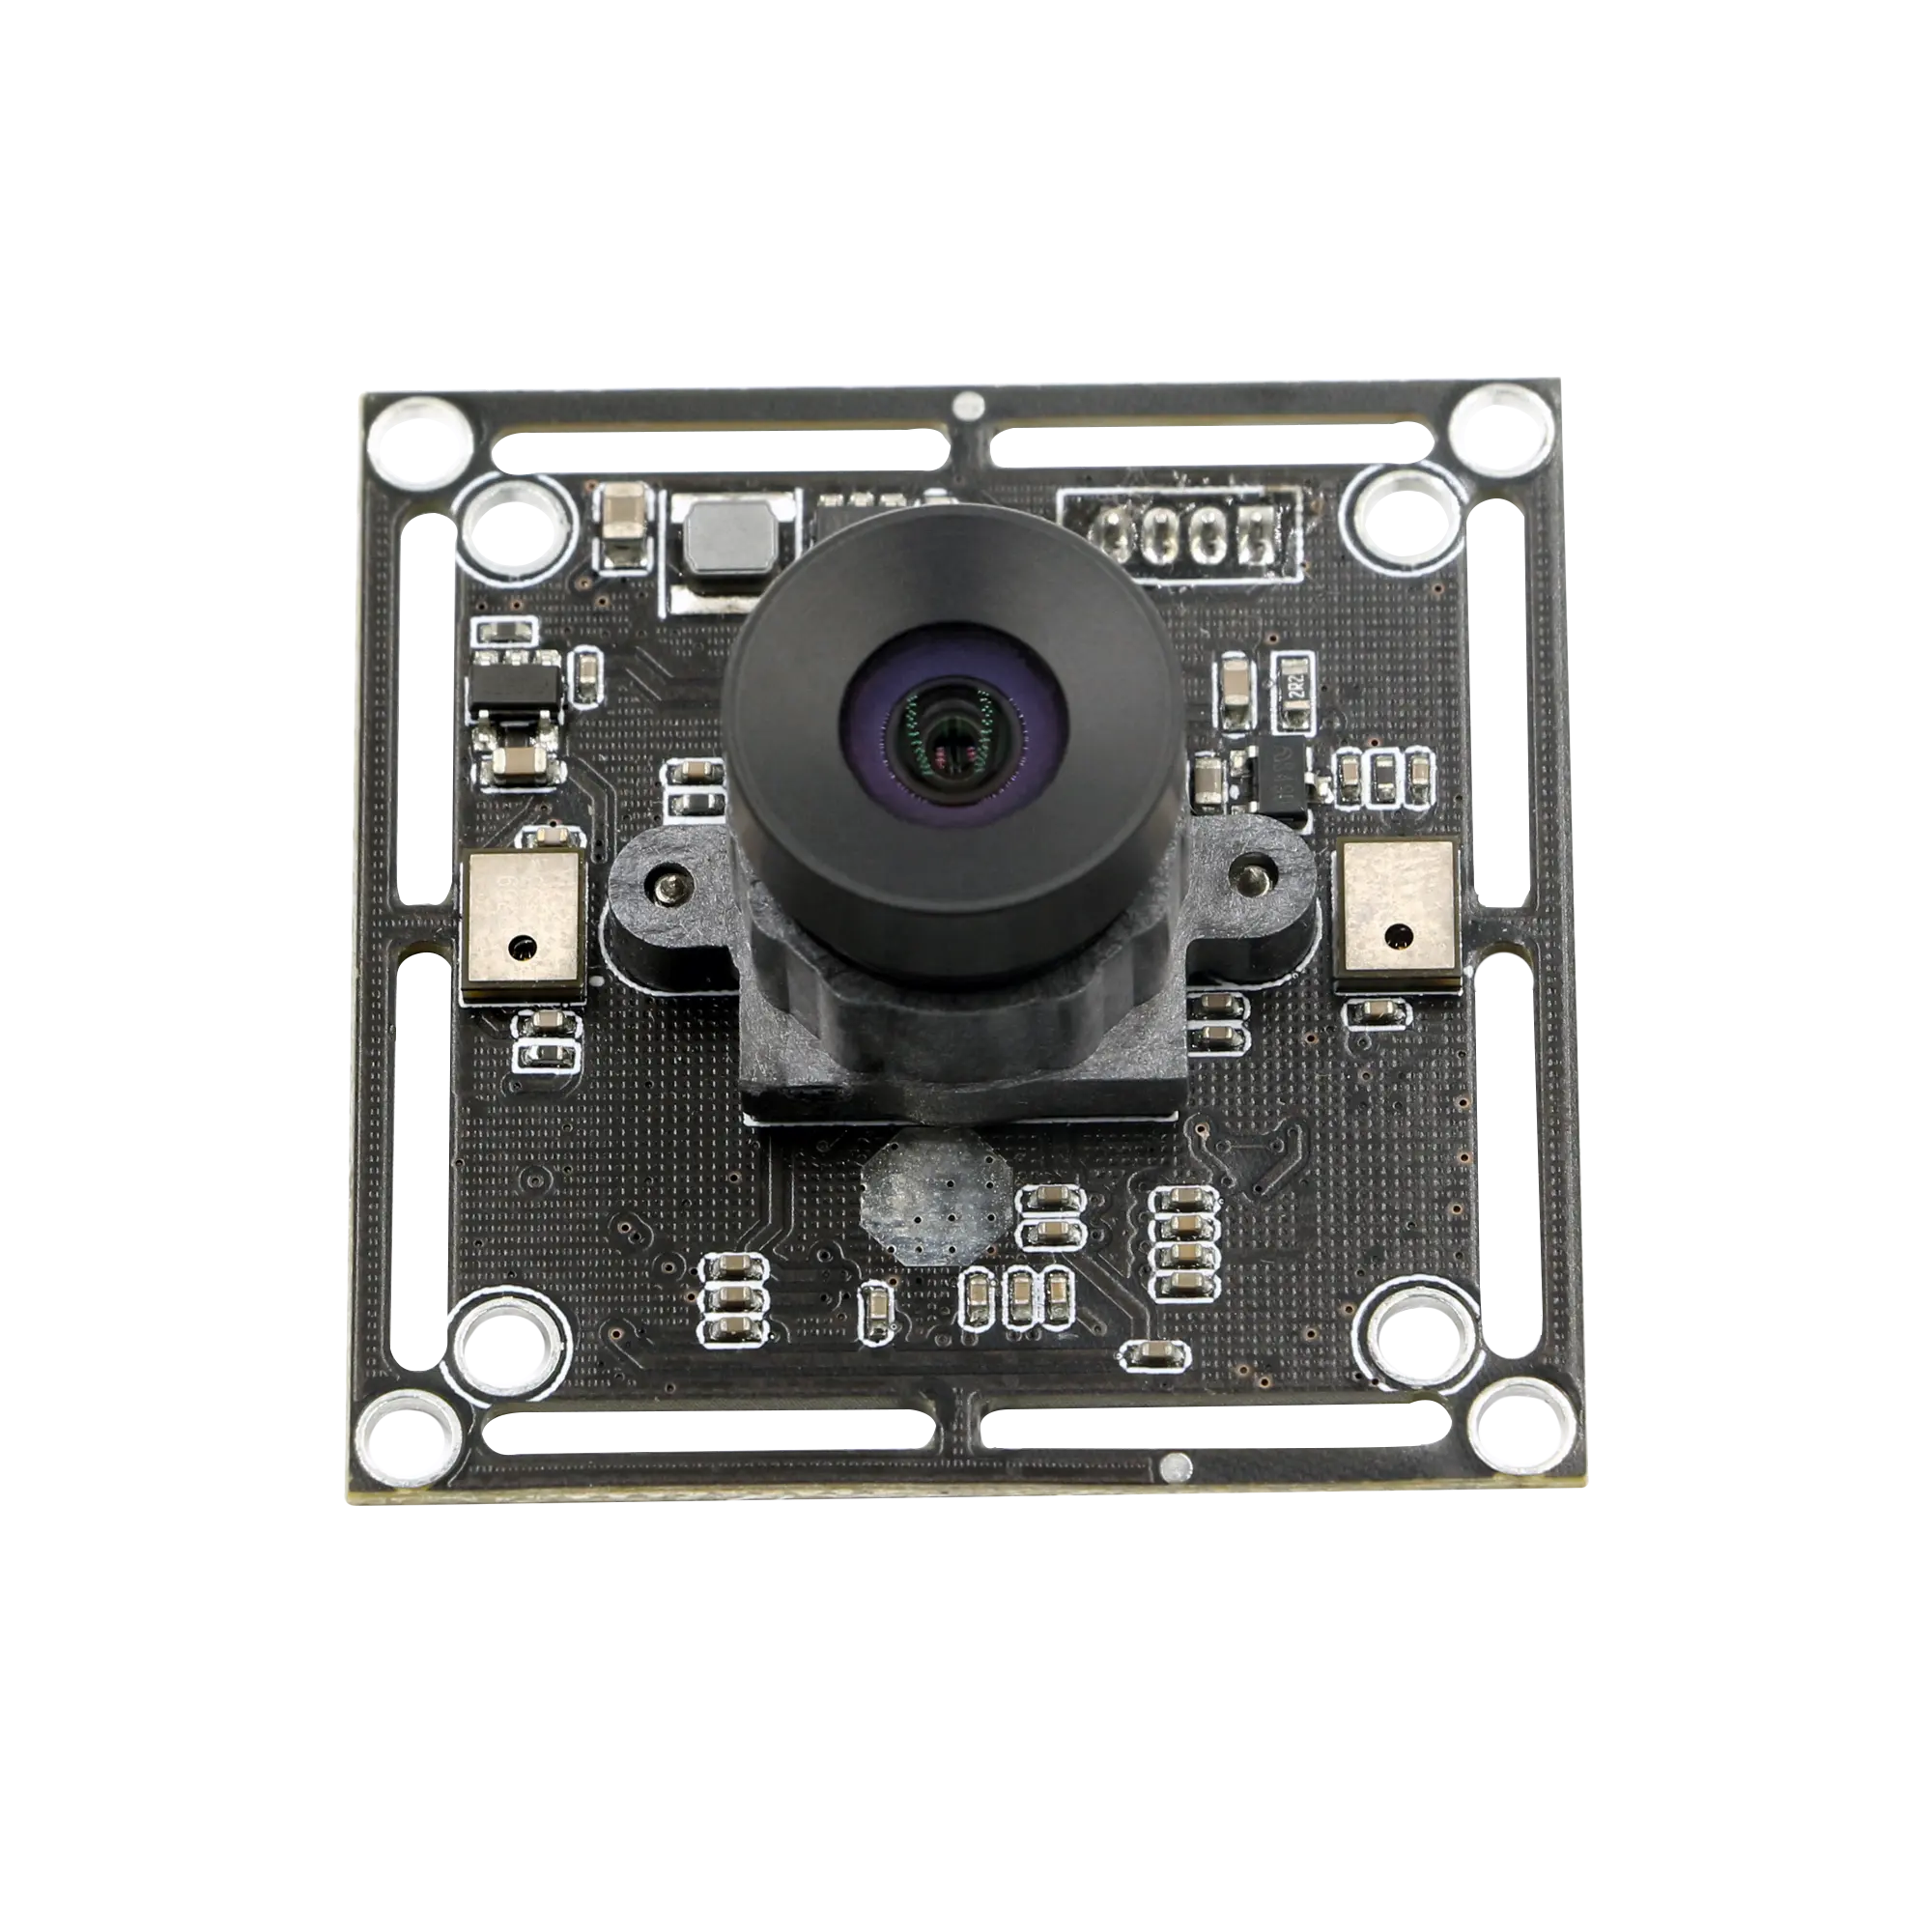 Oem Imx323 Cmos Sensor Wdr Starlight Nachtzicht 2mp Usb2.0 Groothoek Cameramodule 1080P